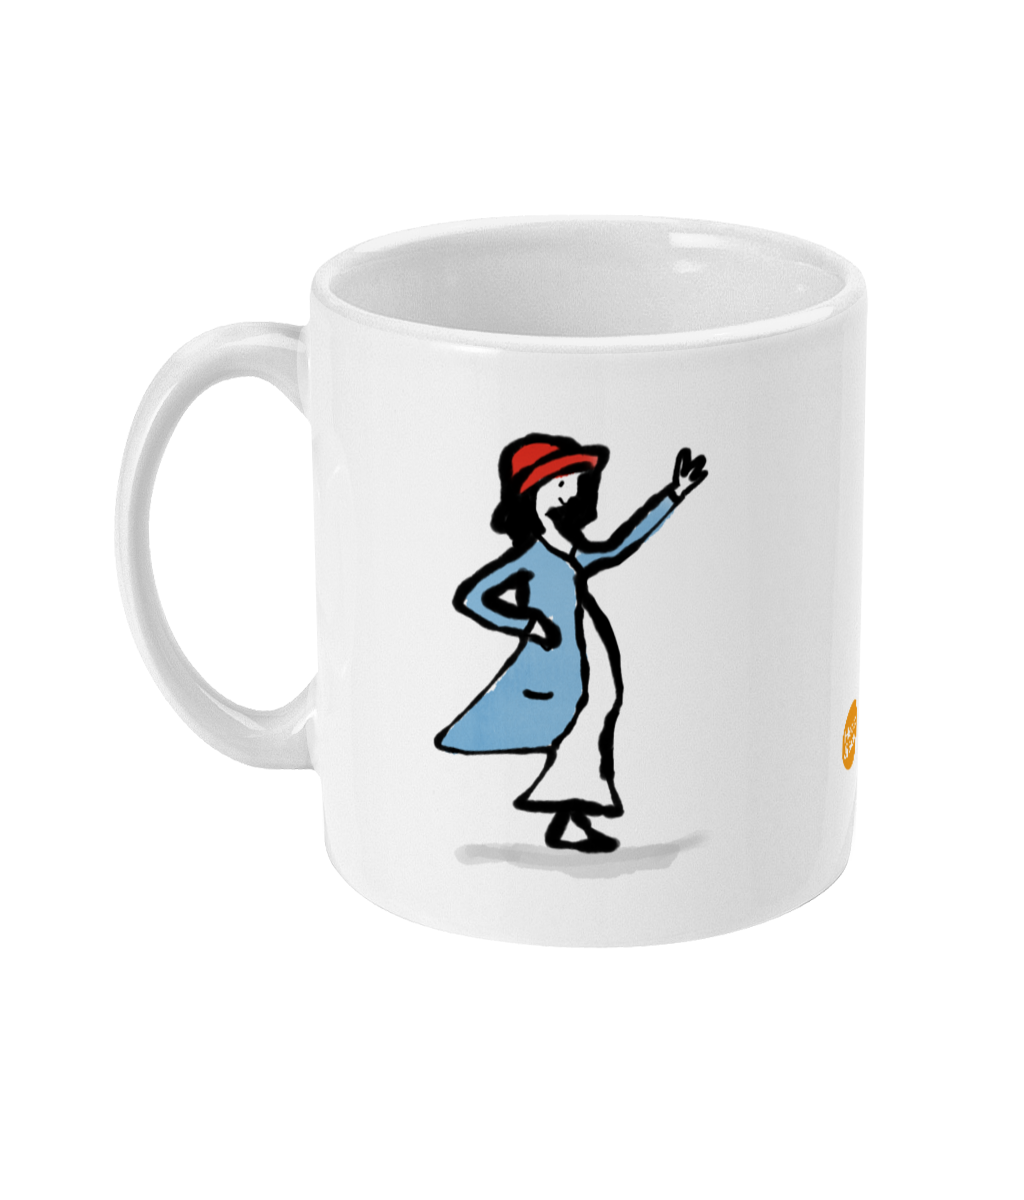 Waving Girl coffee mug design by Hector and Bone Left View